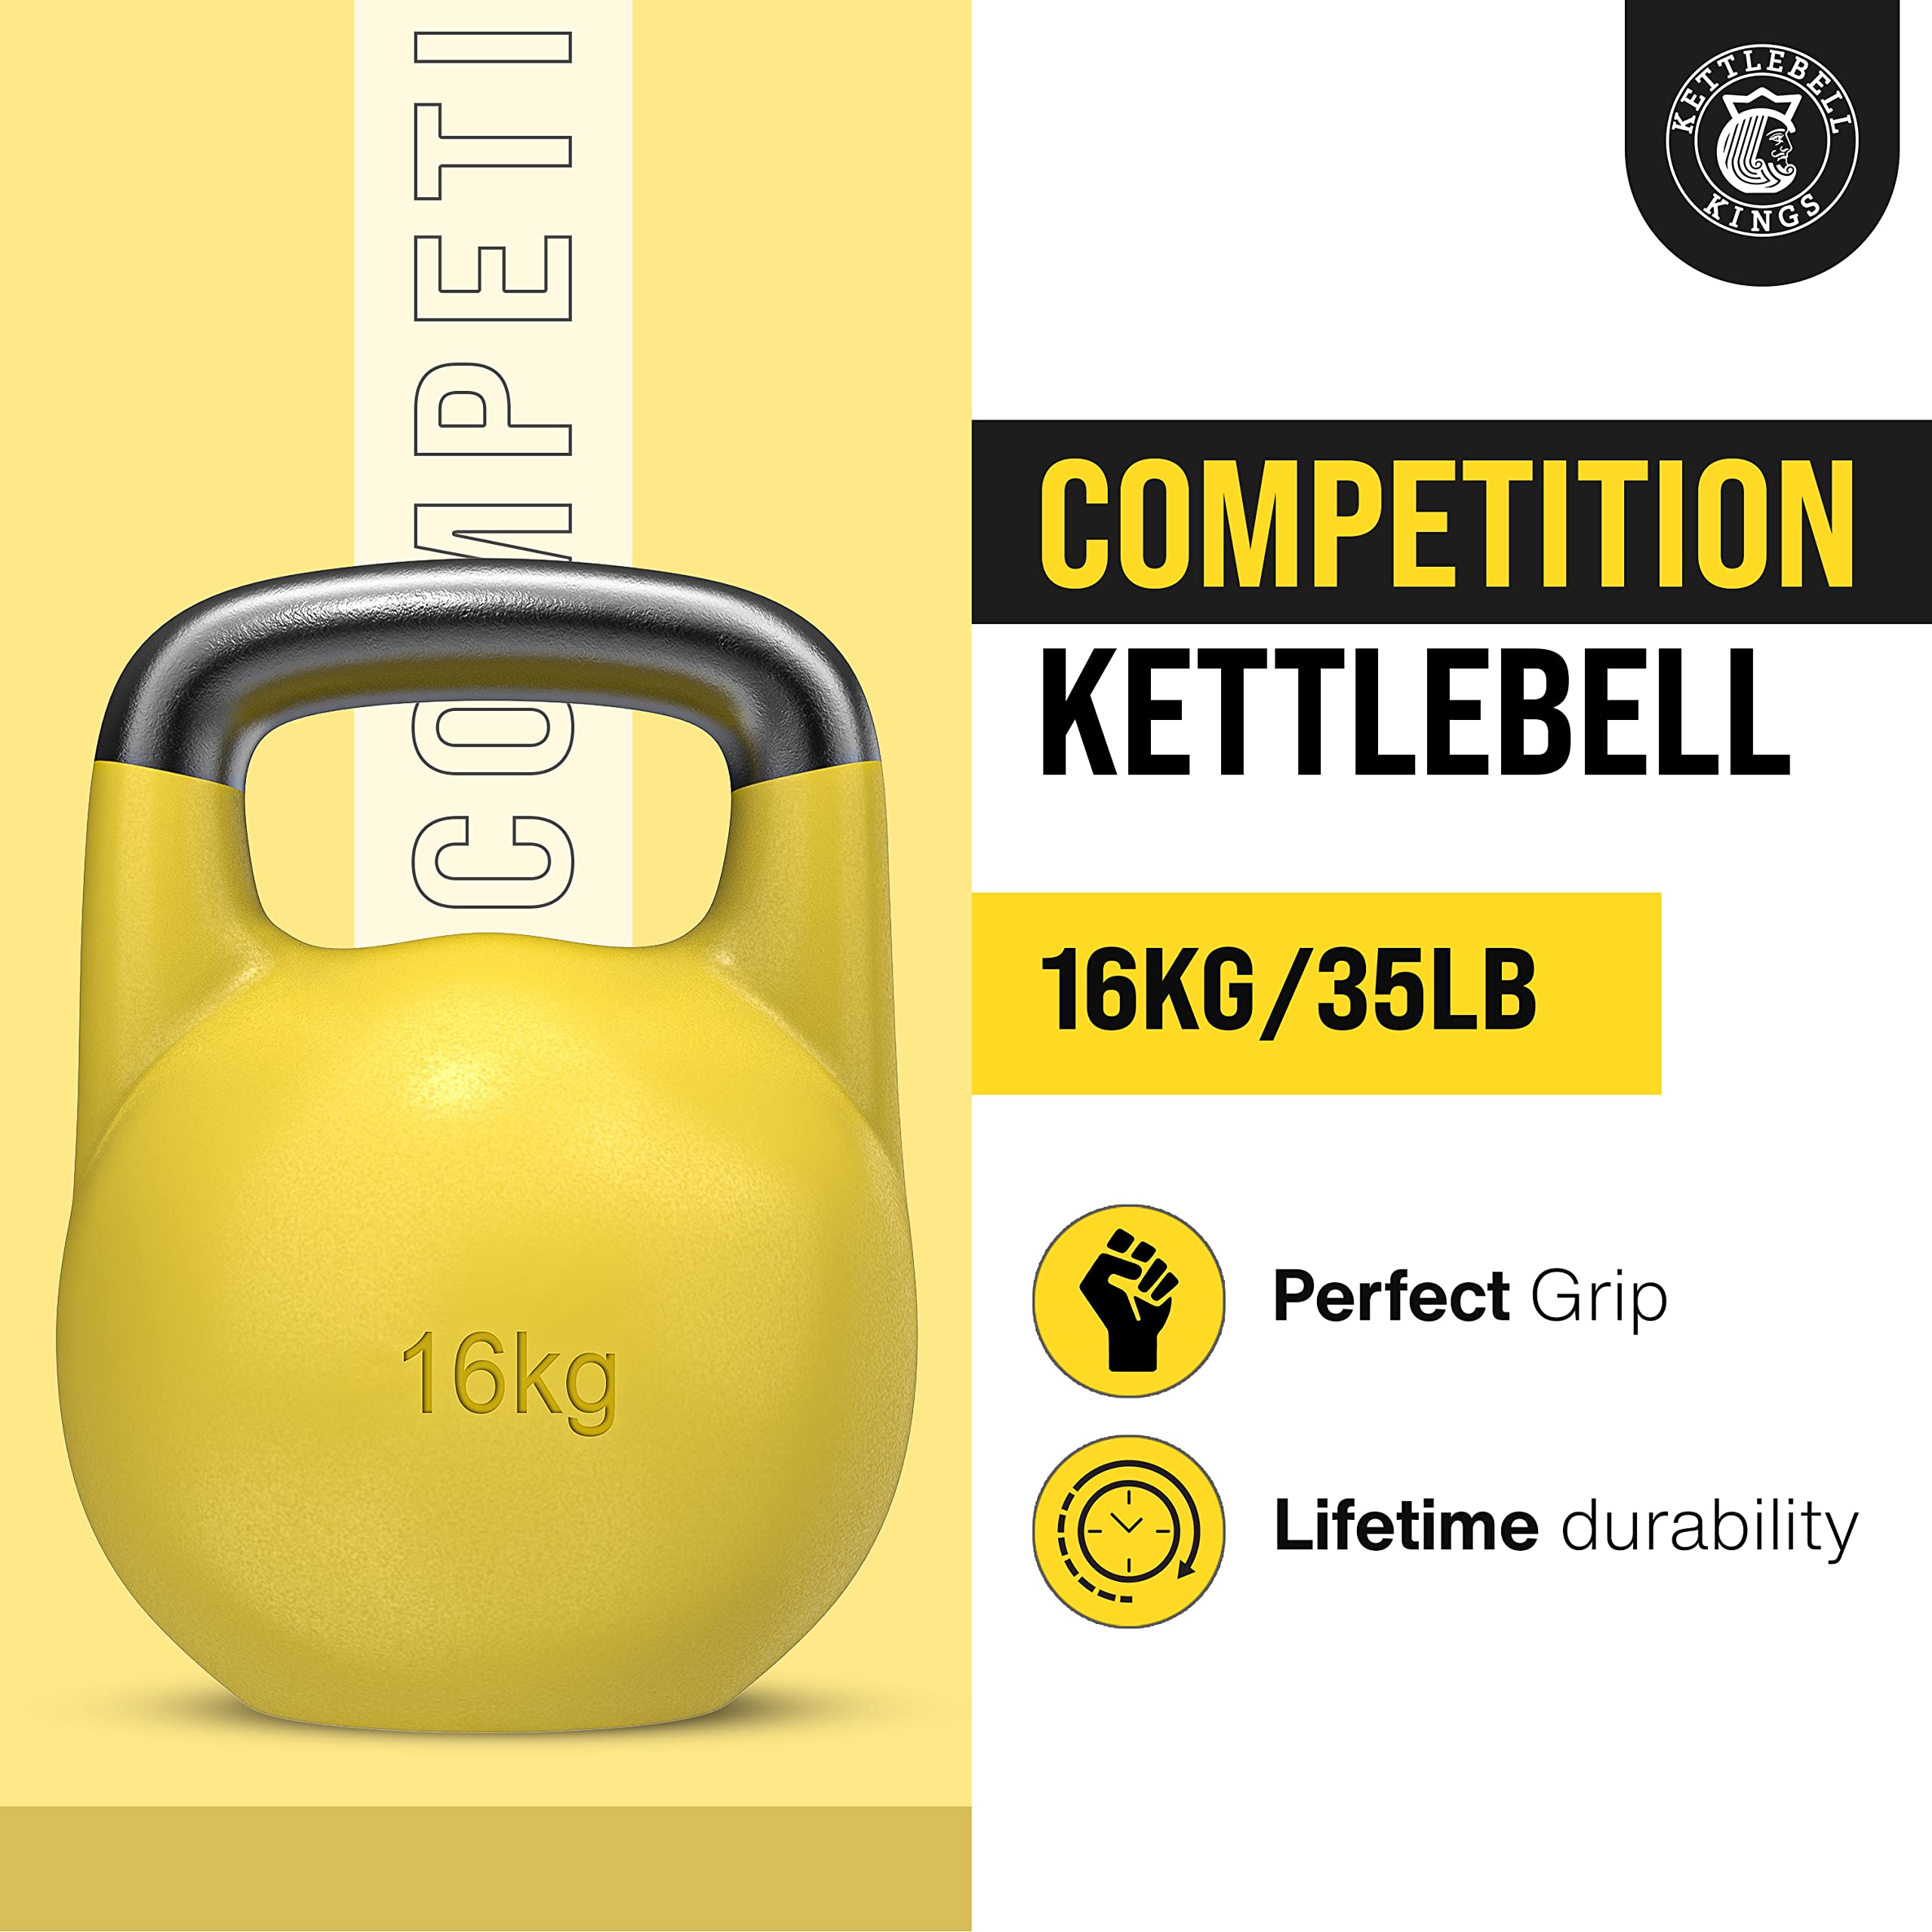 Buy Competition Kettlebell from Kettlebell Kings